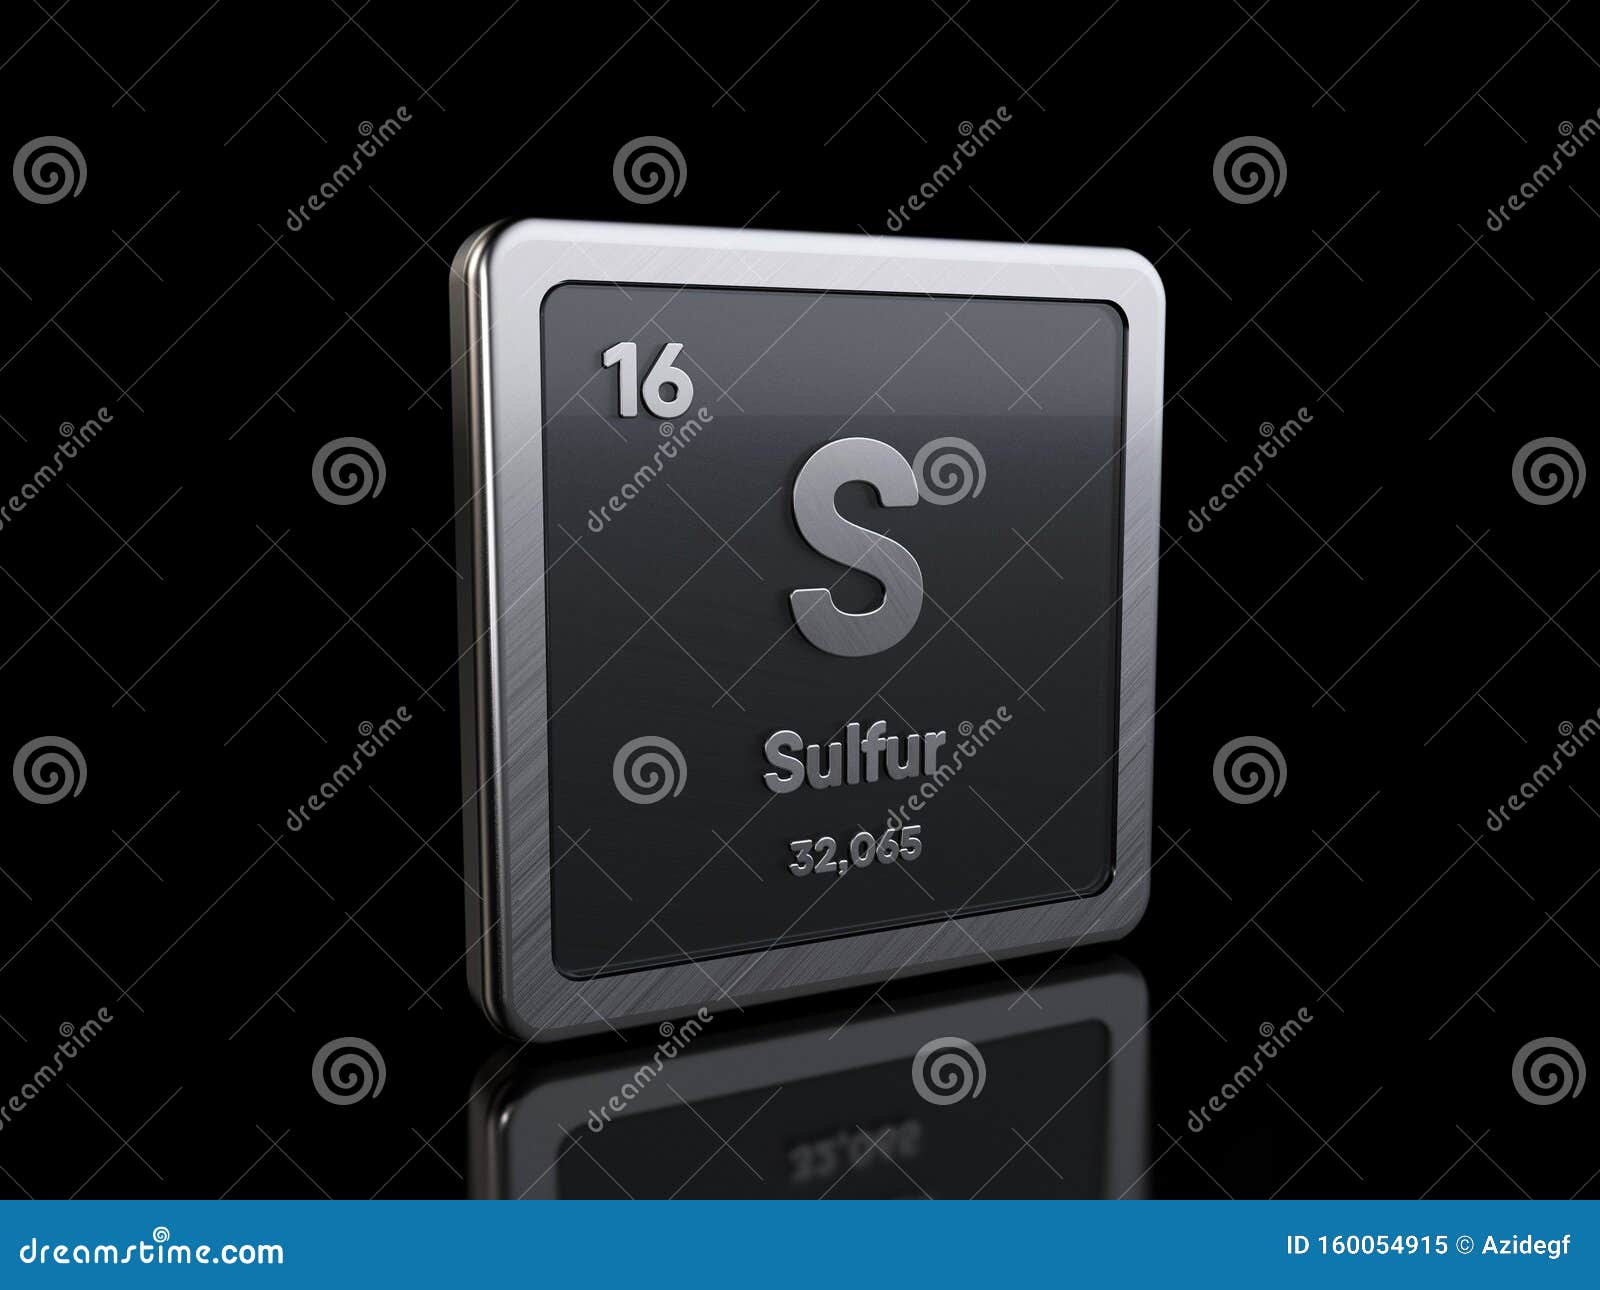 Sulfur S